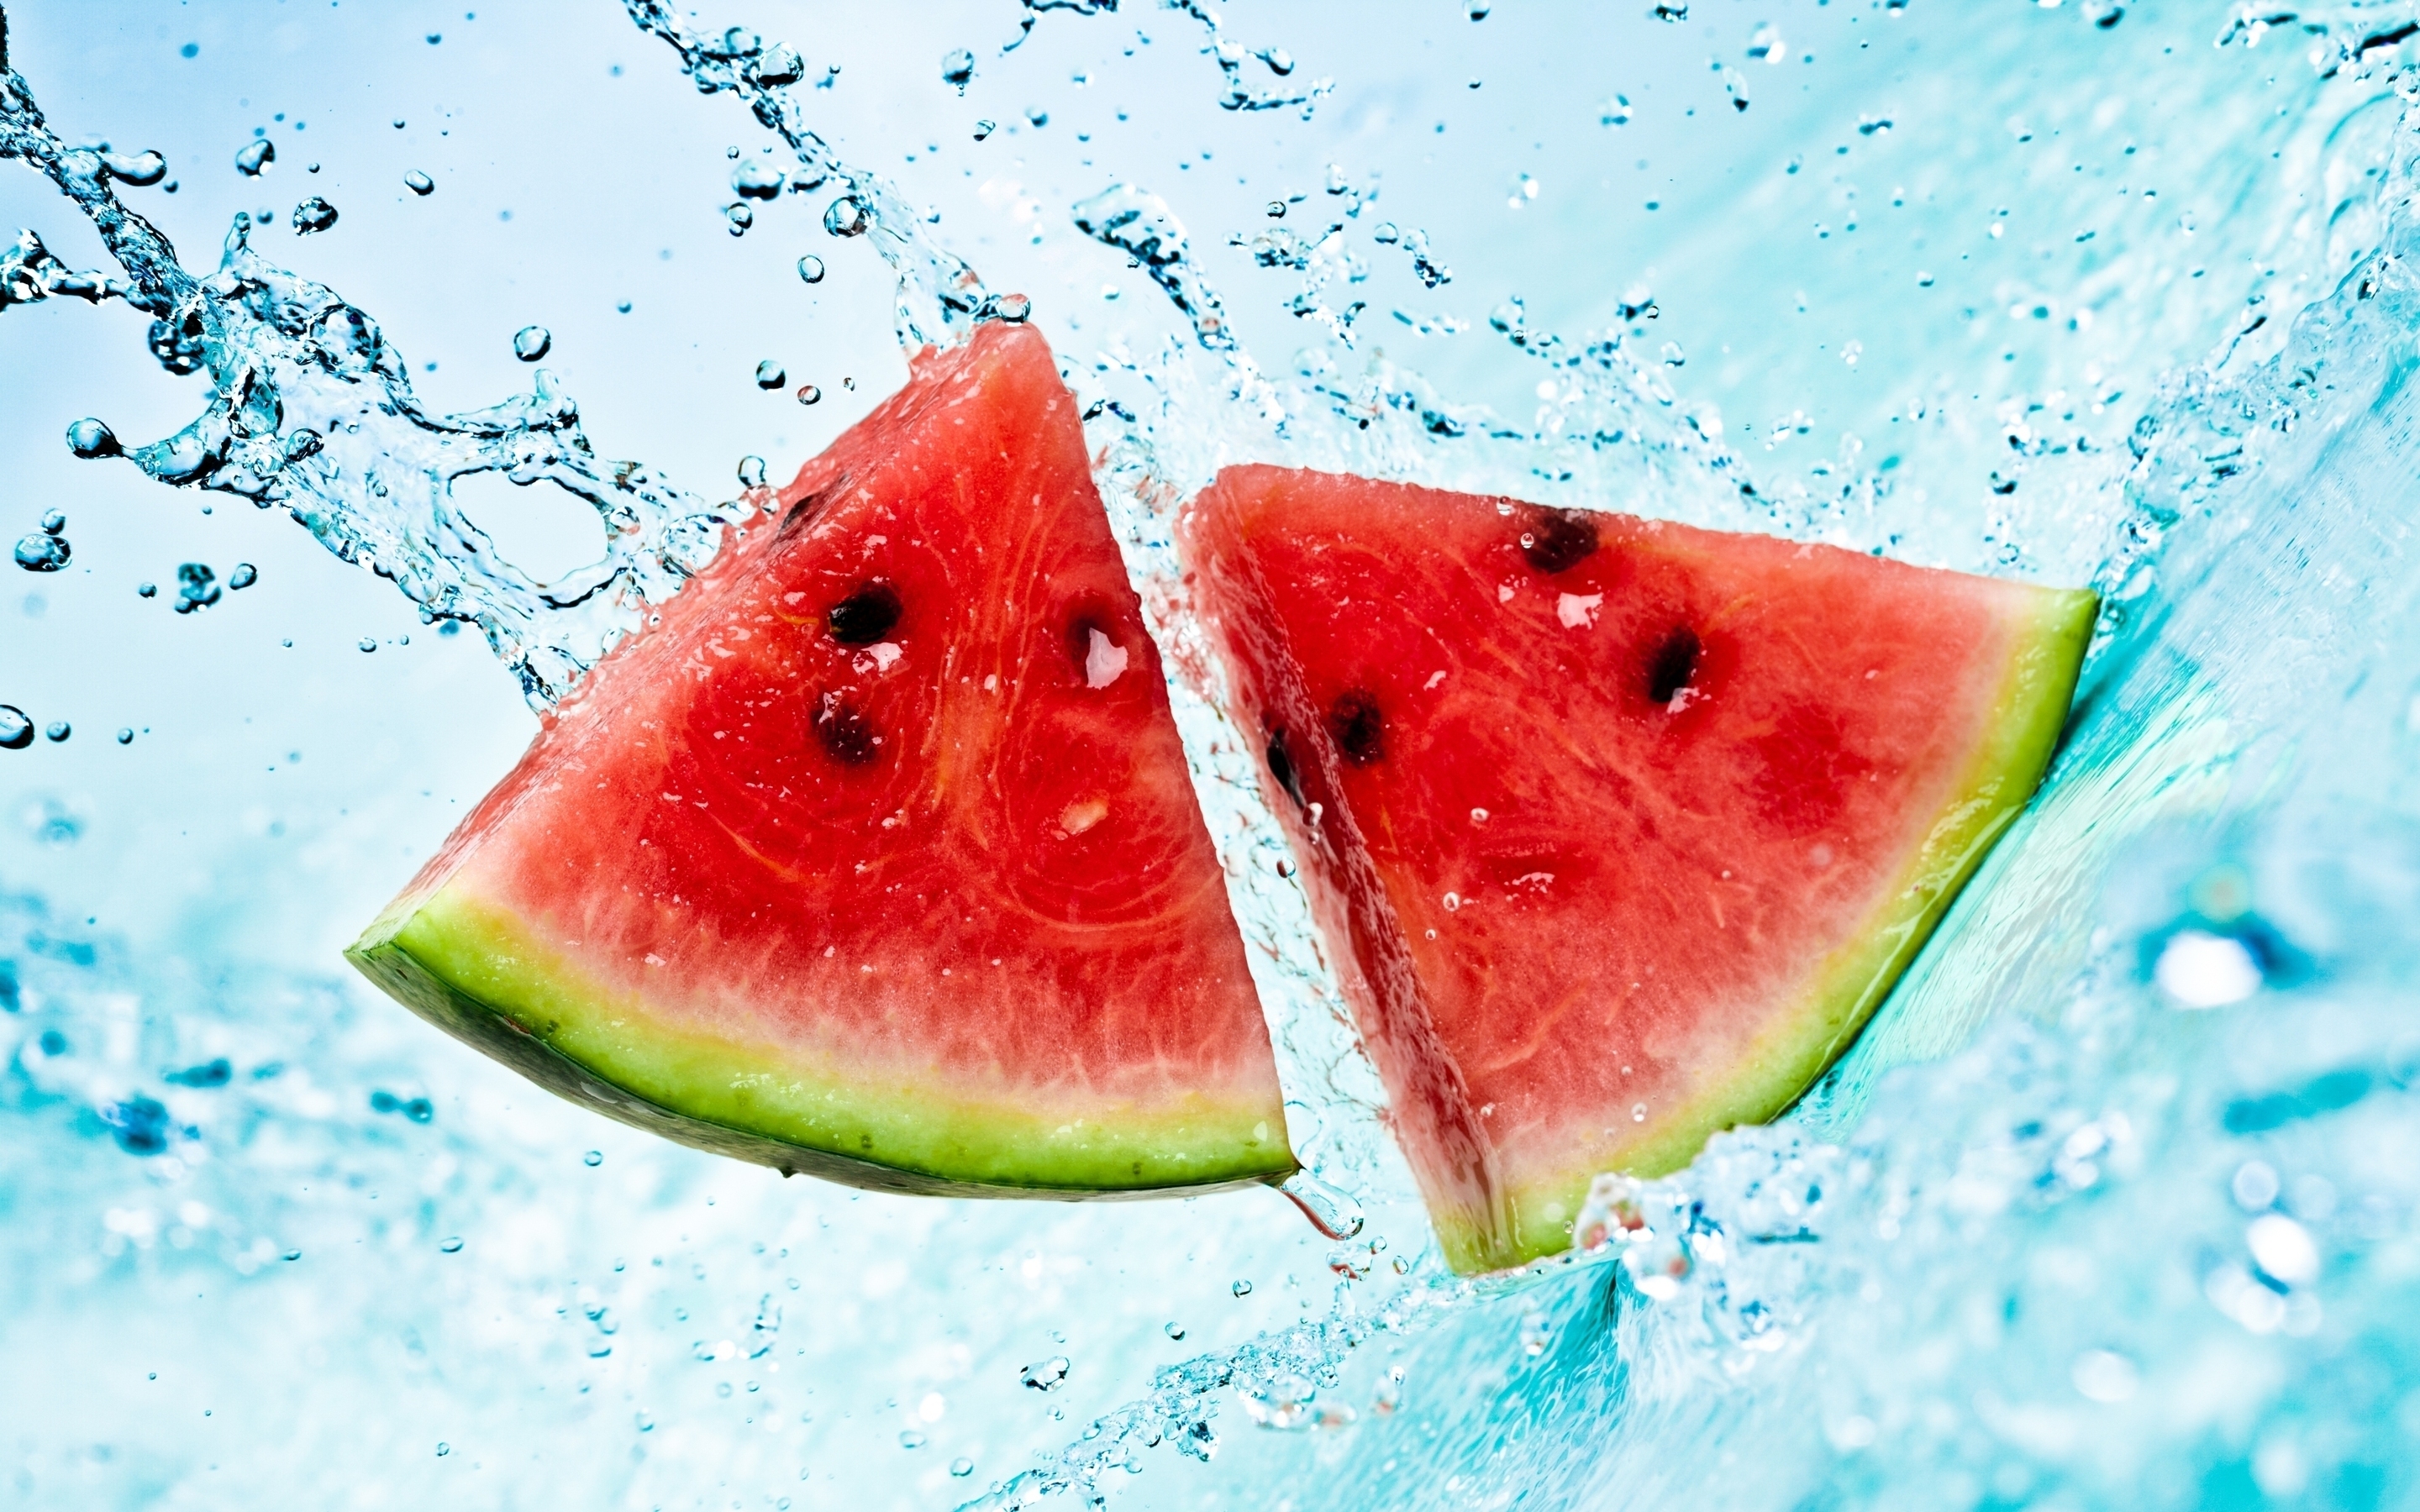 Watermelon Slices for 2880 x 1800 Retina Display resolution